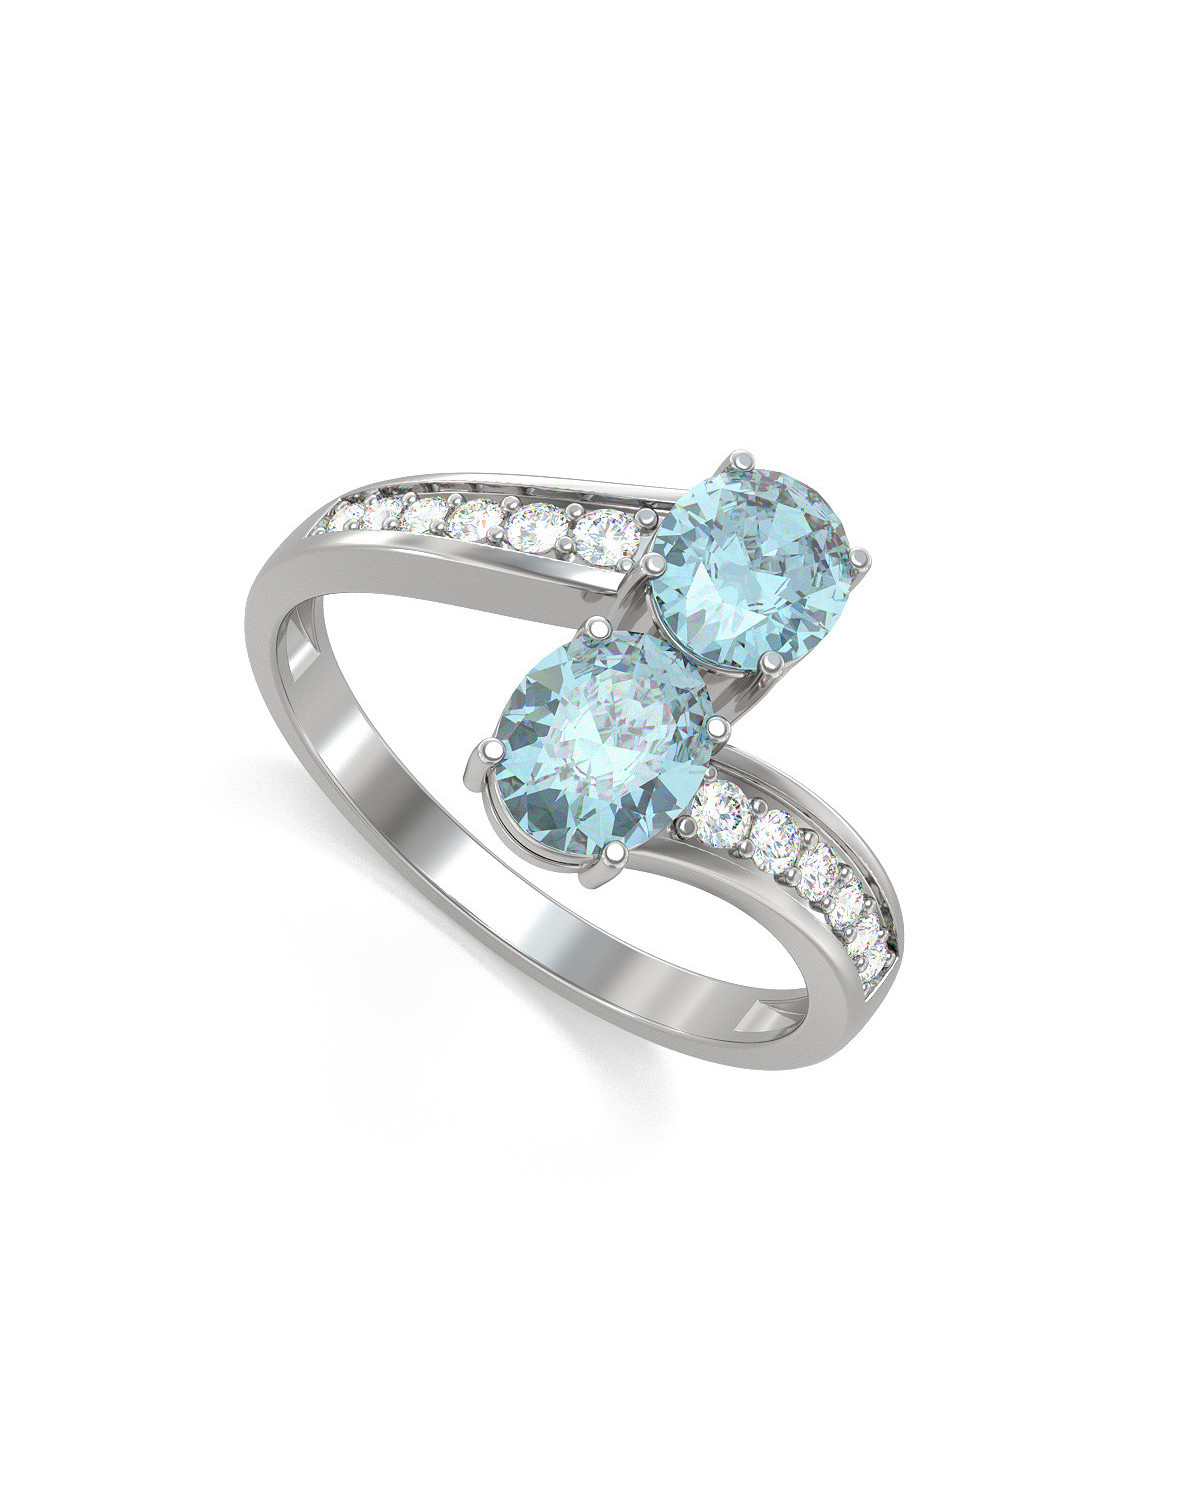 Gold Emerald Diamonds Ring 1.32grs ADEN - 1